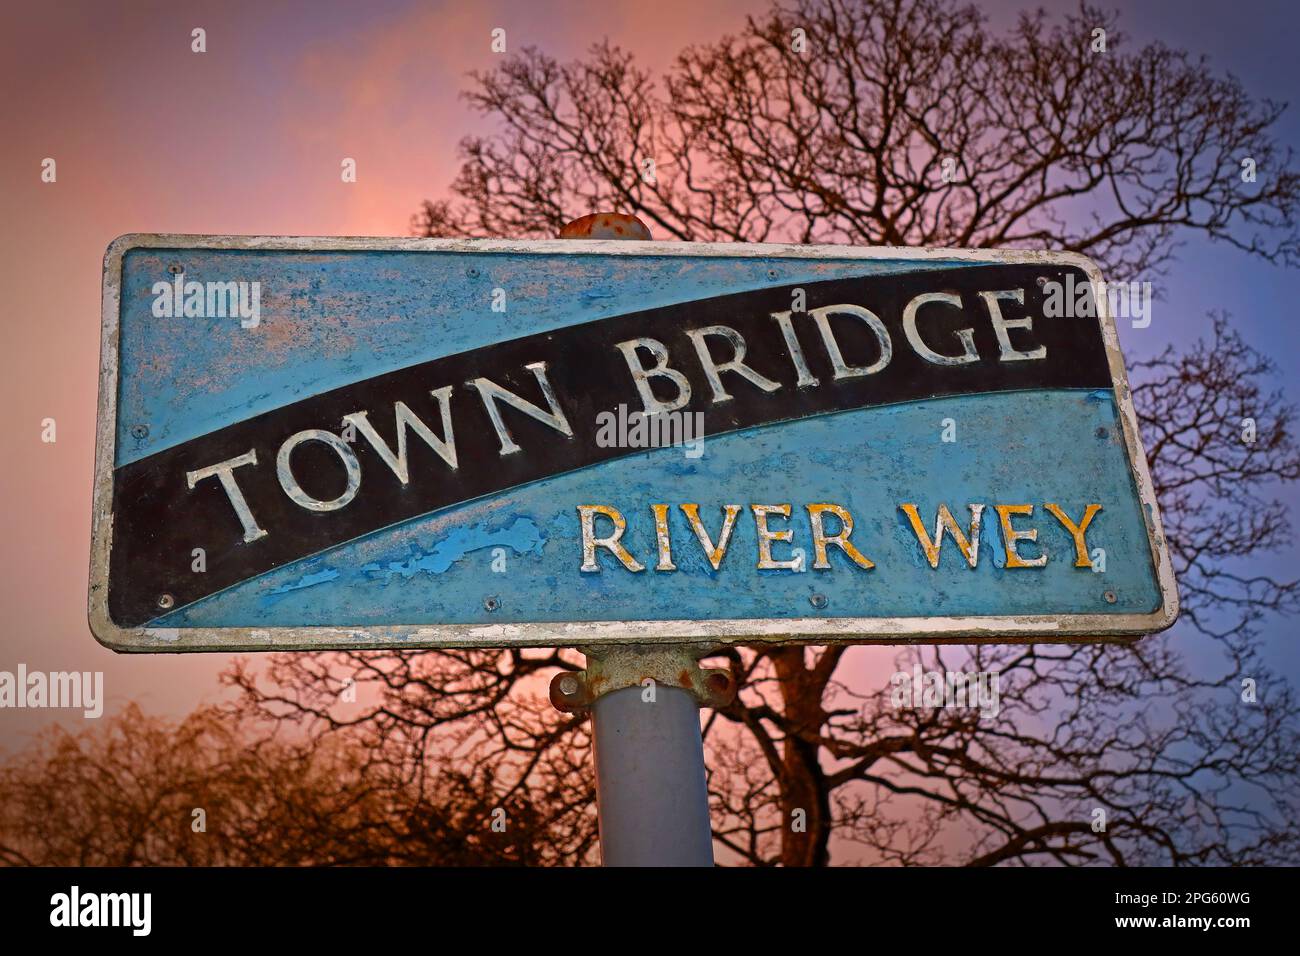 Town Bridge, River Wey sign, Bridge Street, Godalming, Waverley Borough Council, Surrey, England, UK, GU7 1HP Stock Photo